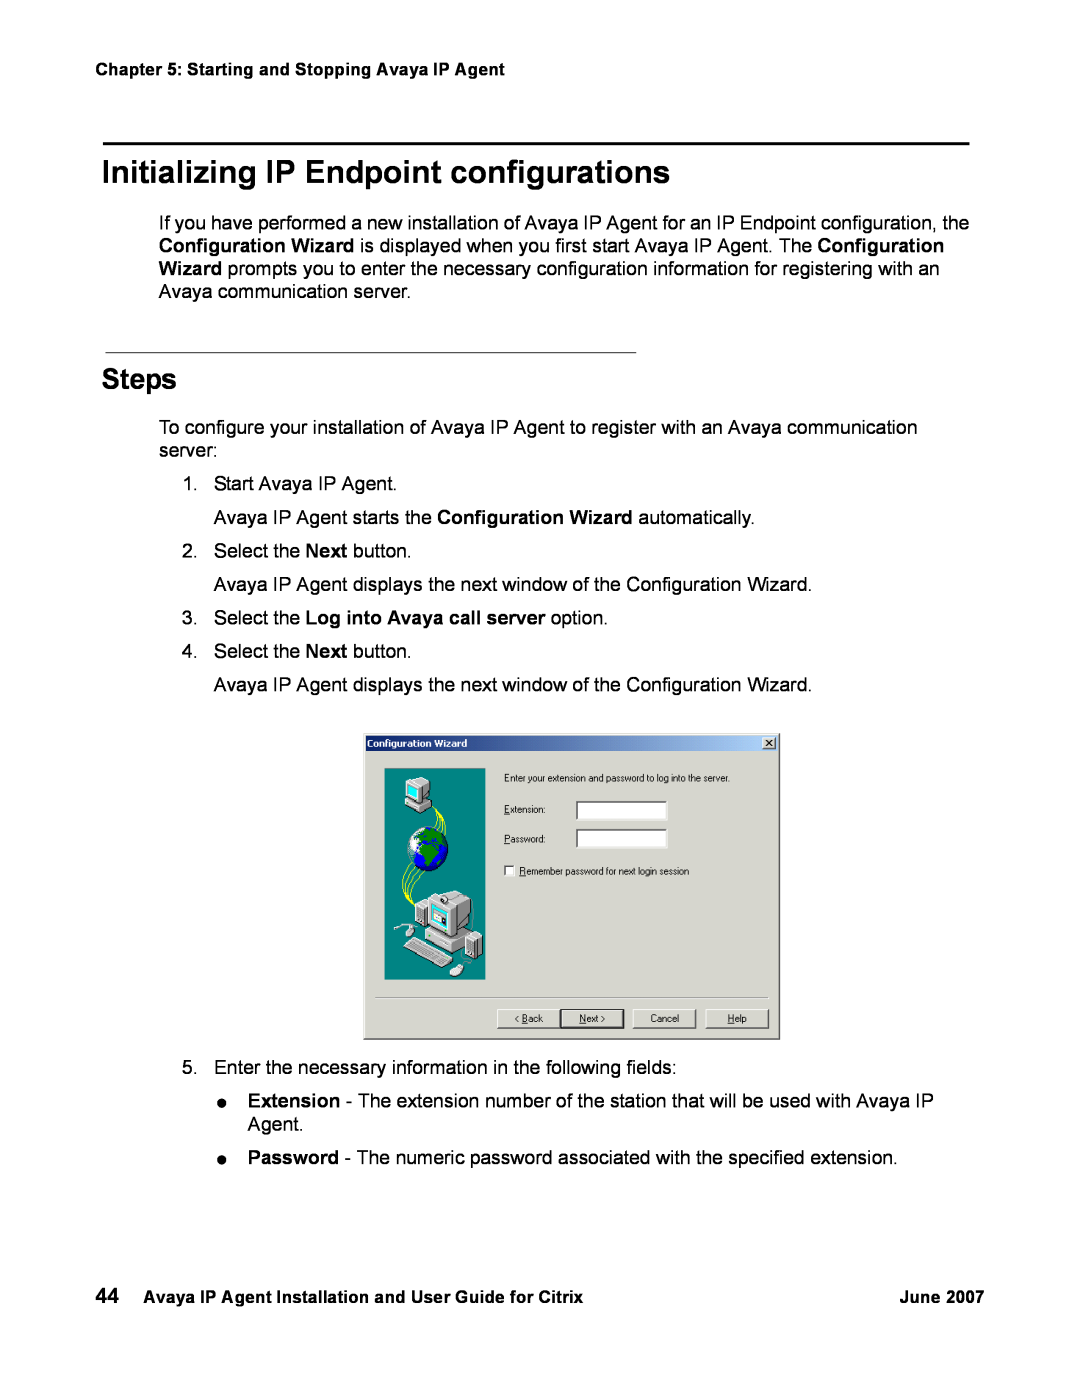 Avaya 7 manual Initializing IP Endpoint configurations, Steps 